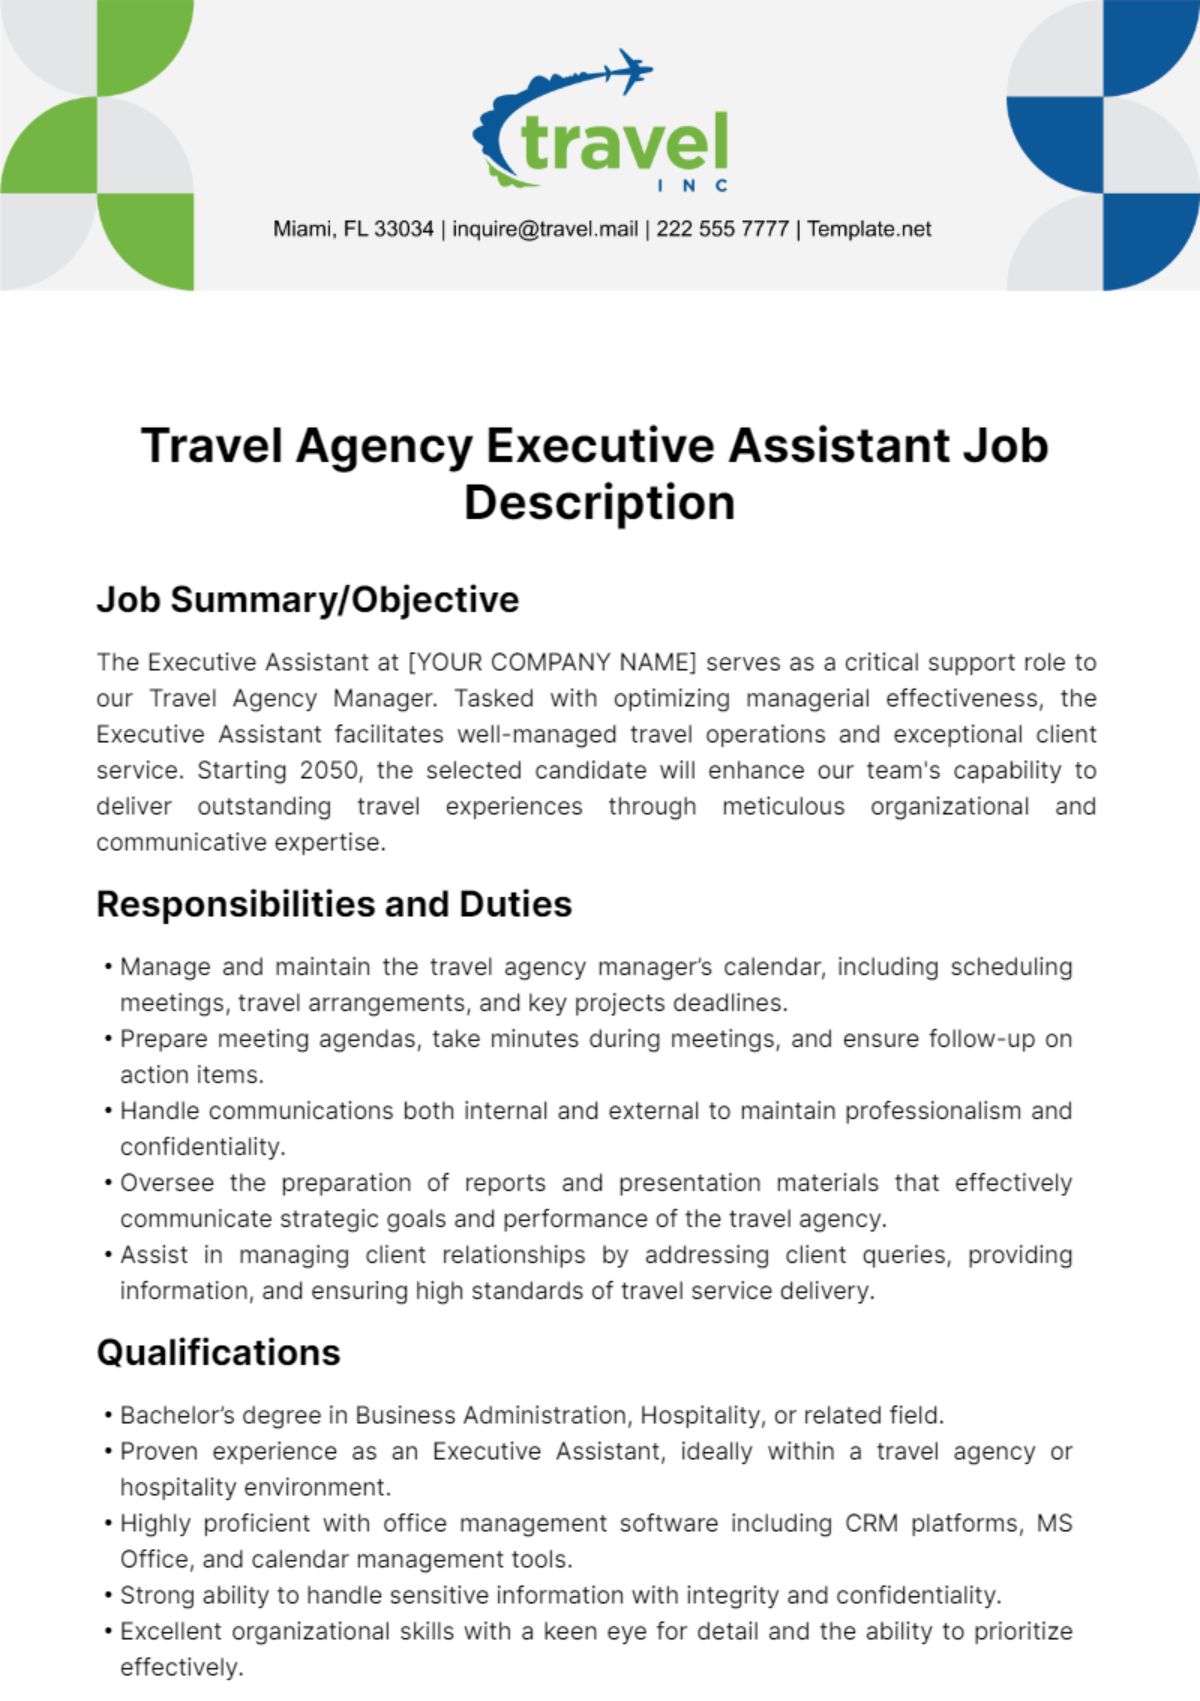 Travel Agency Executive Assistant Job Description Template